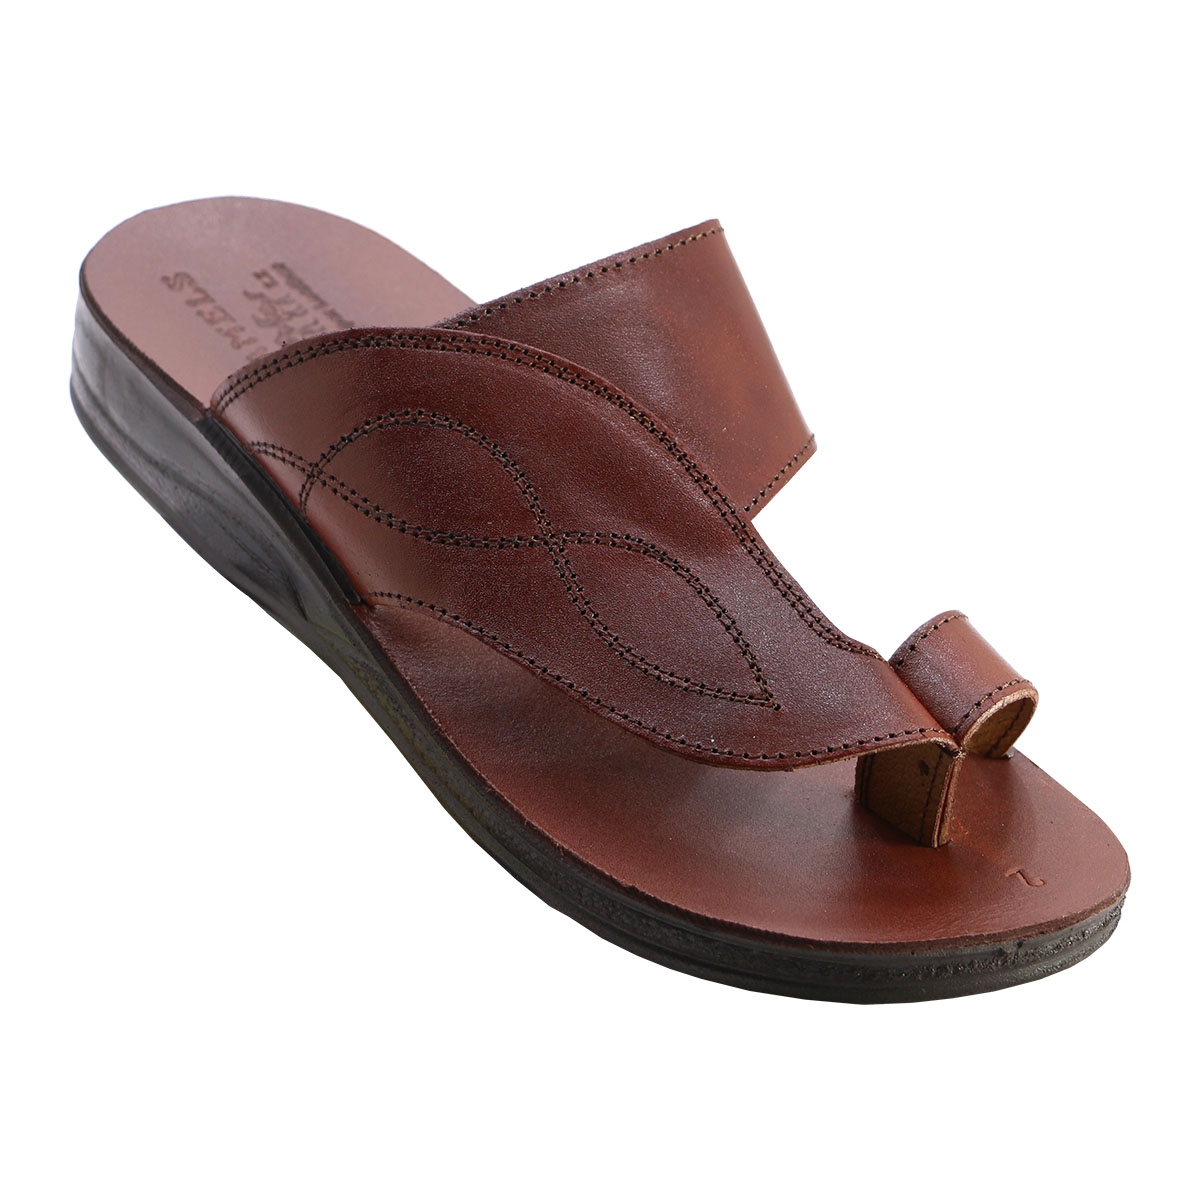 Samaria Handmade Men's Leather Sandals (Brown) - 2